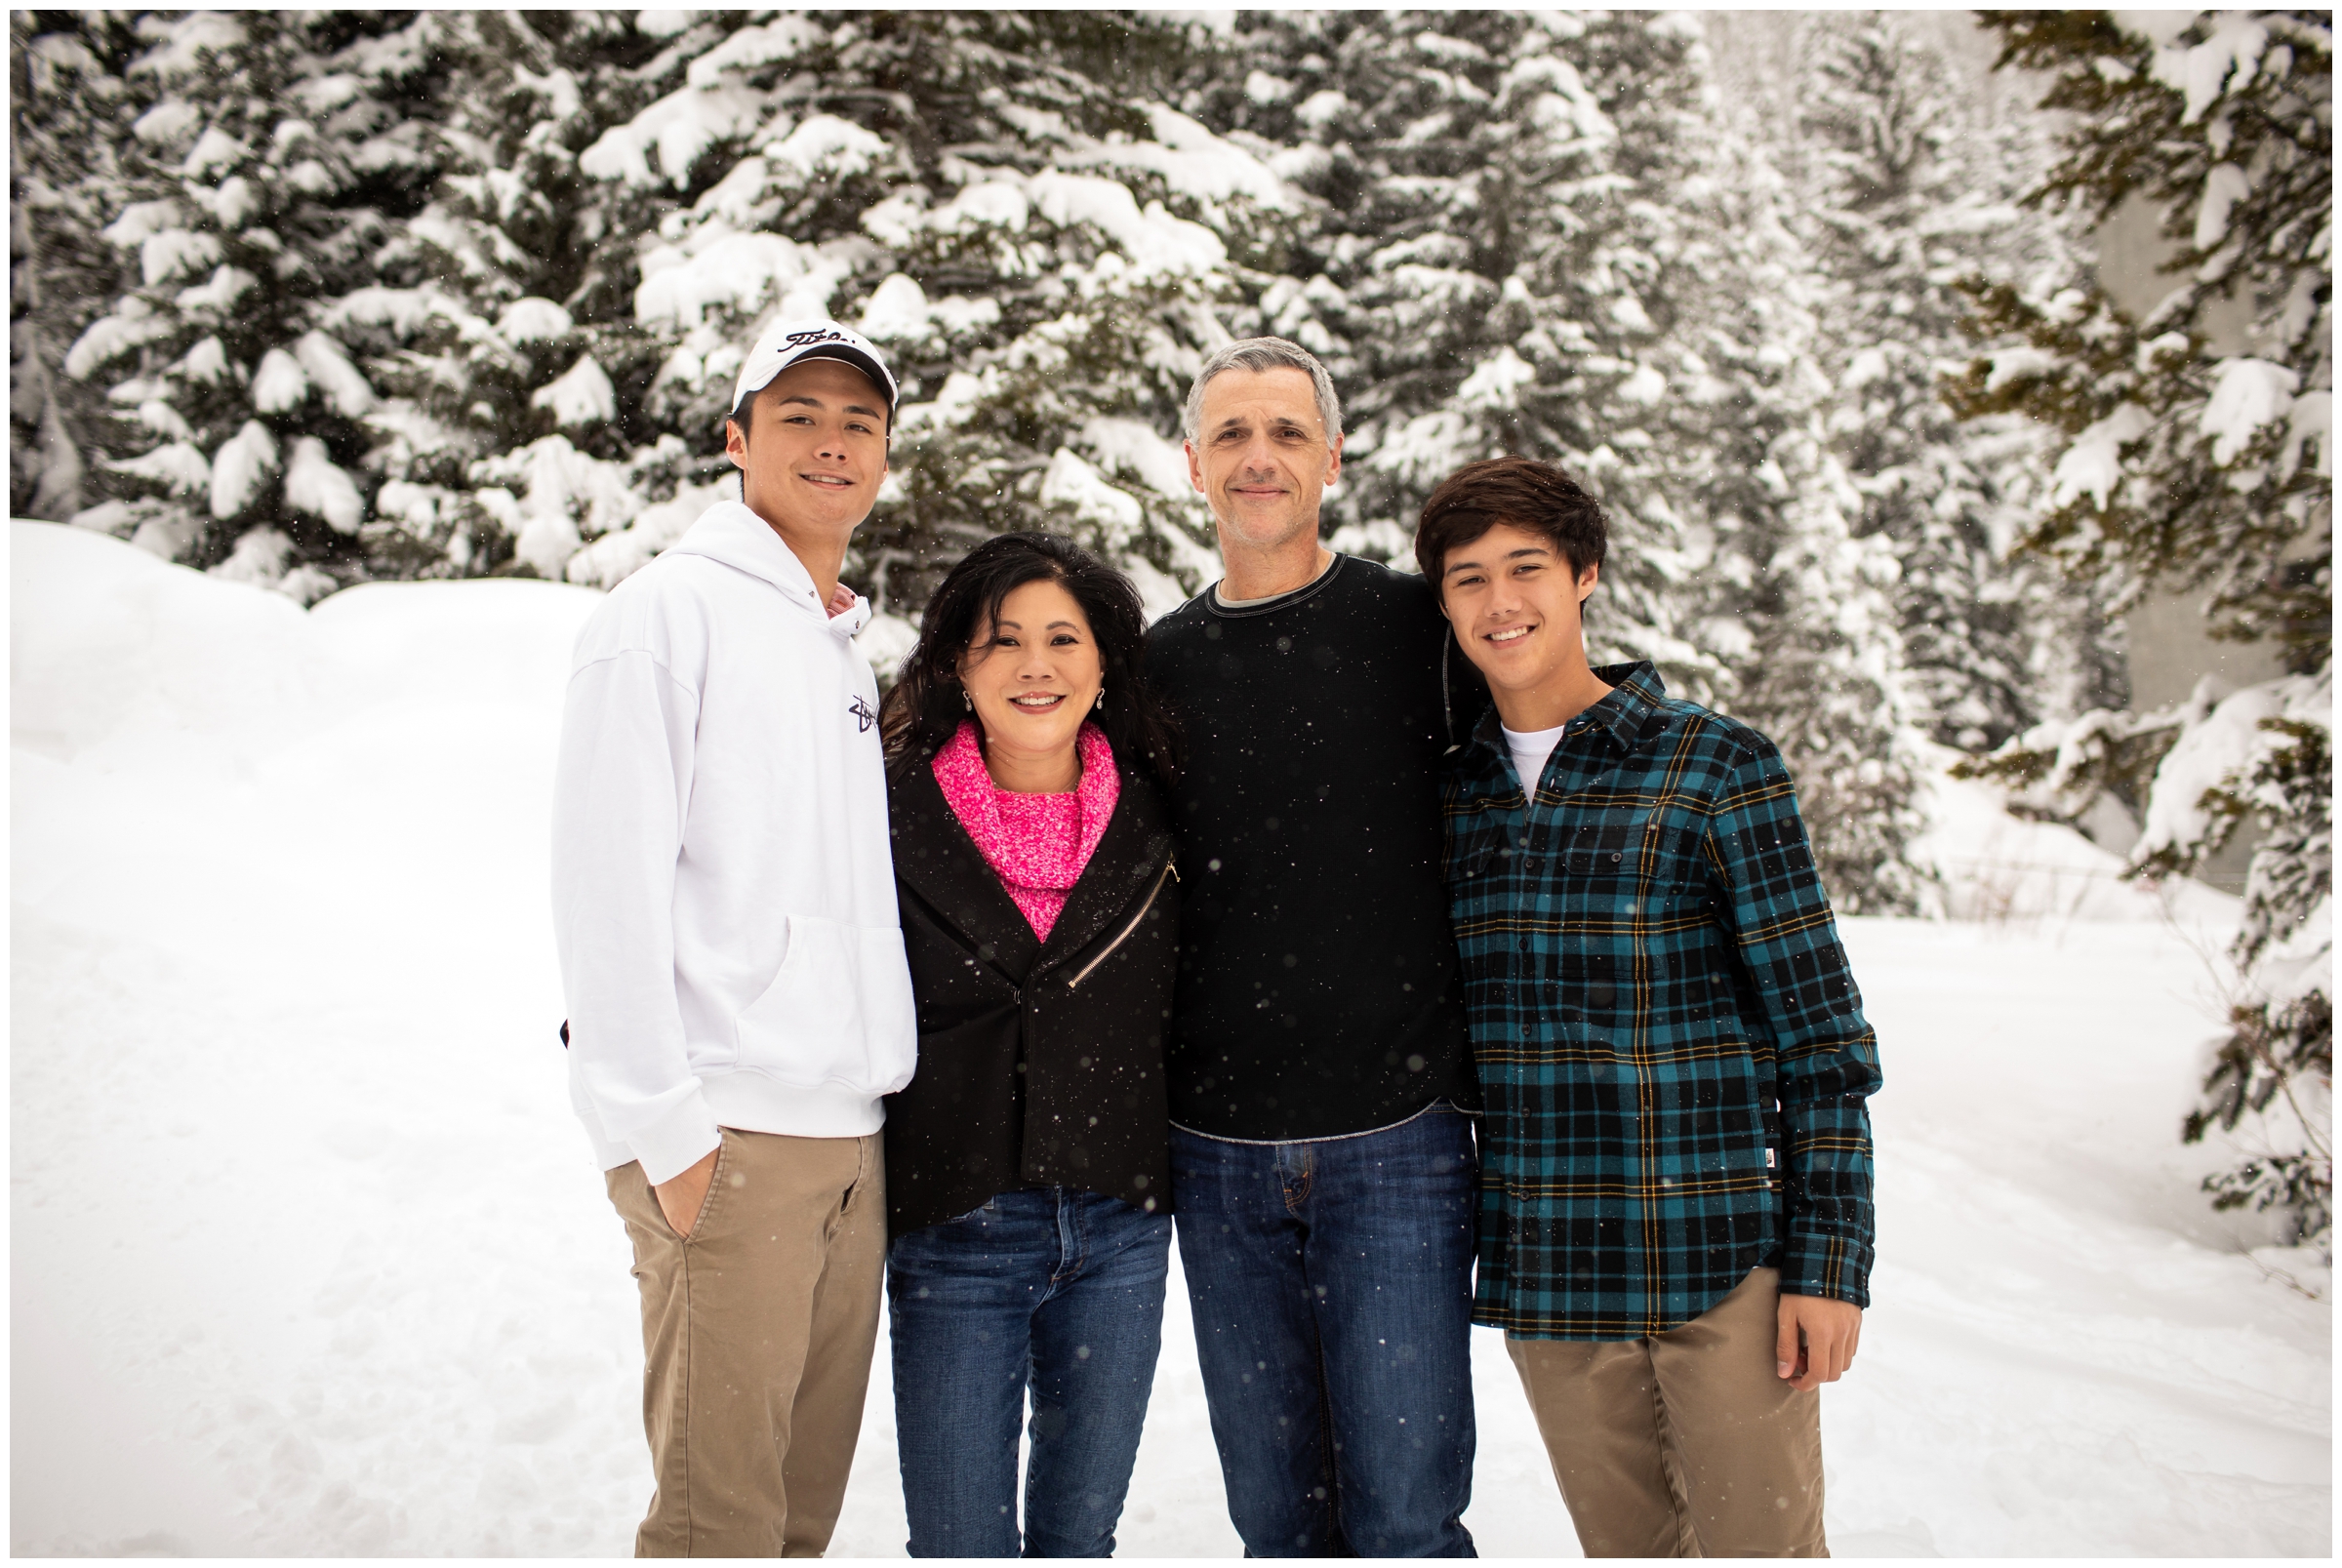 Snowy Winter Park family photos by Colorado portrait photographer Plum Pretty Photography